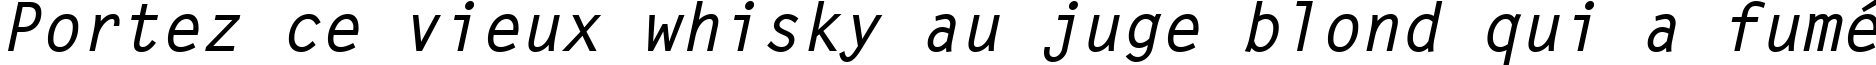 Пример написания шрифтом Letter Gothic MT Bold Oblique текста на французском